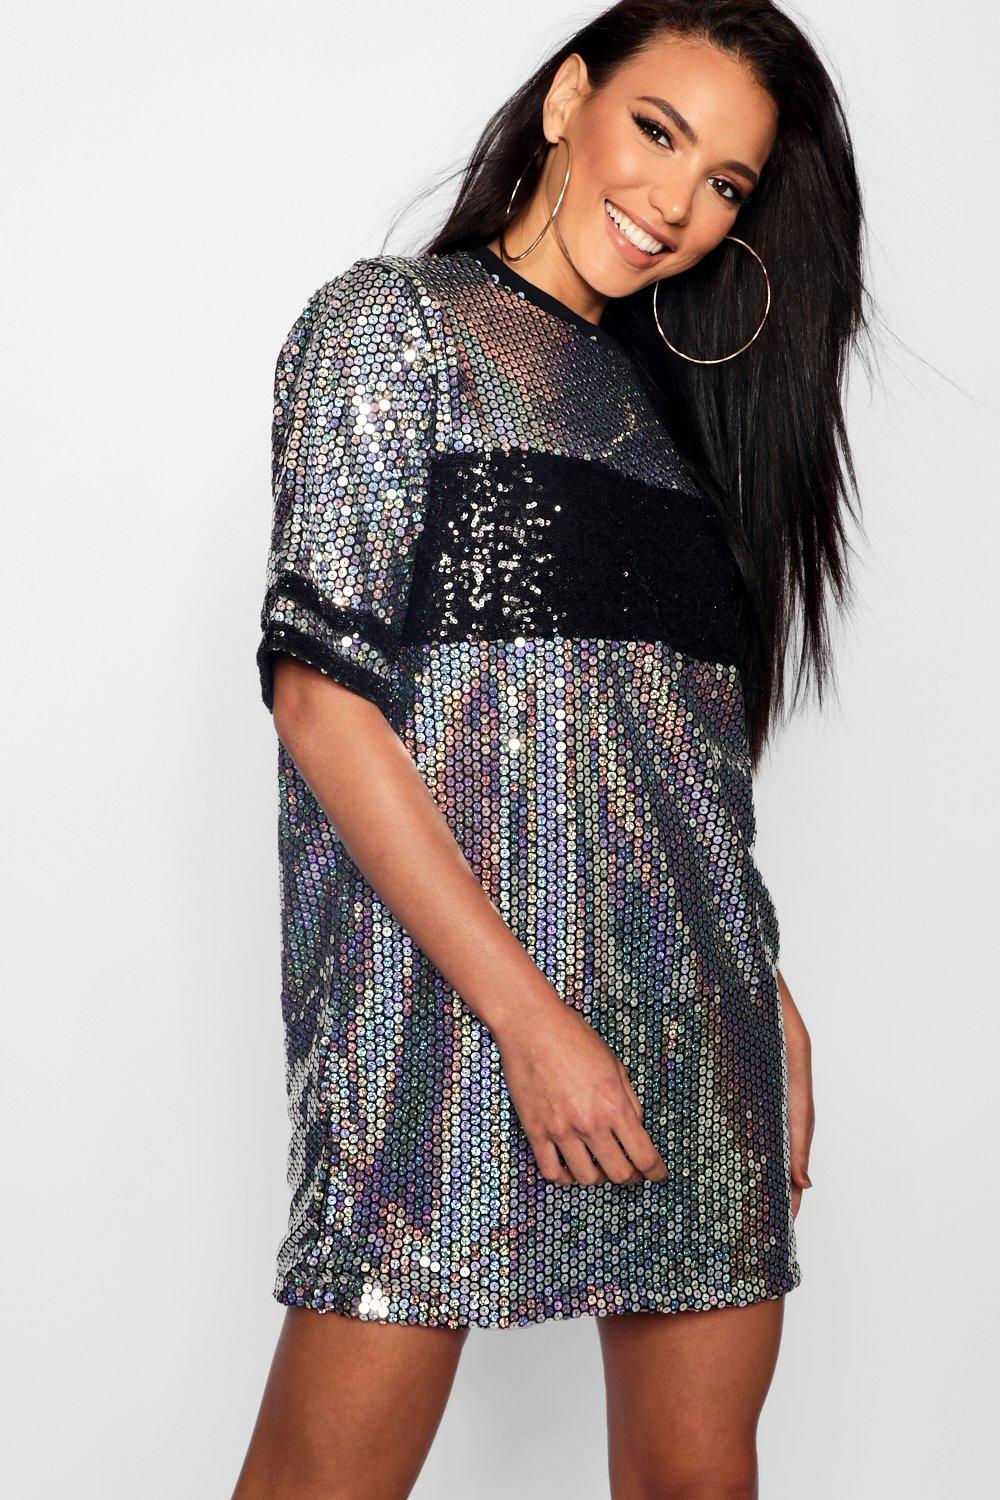 t shirt sparkly dress